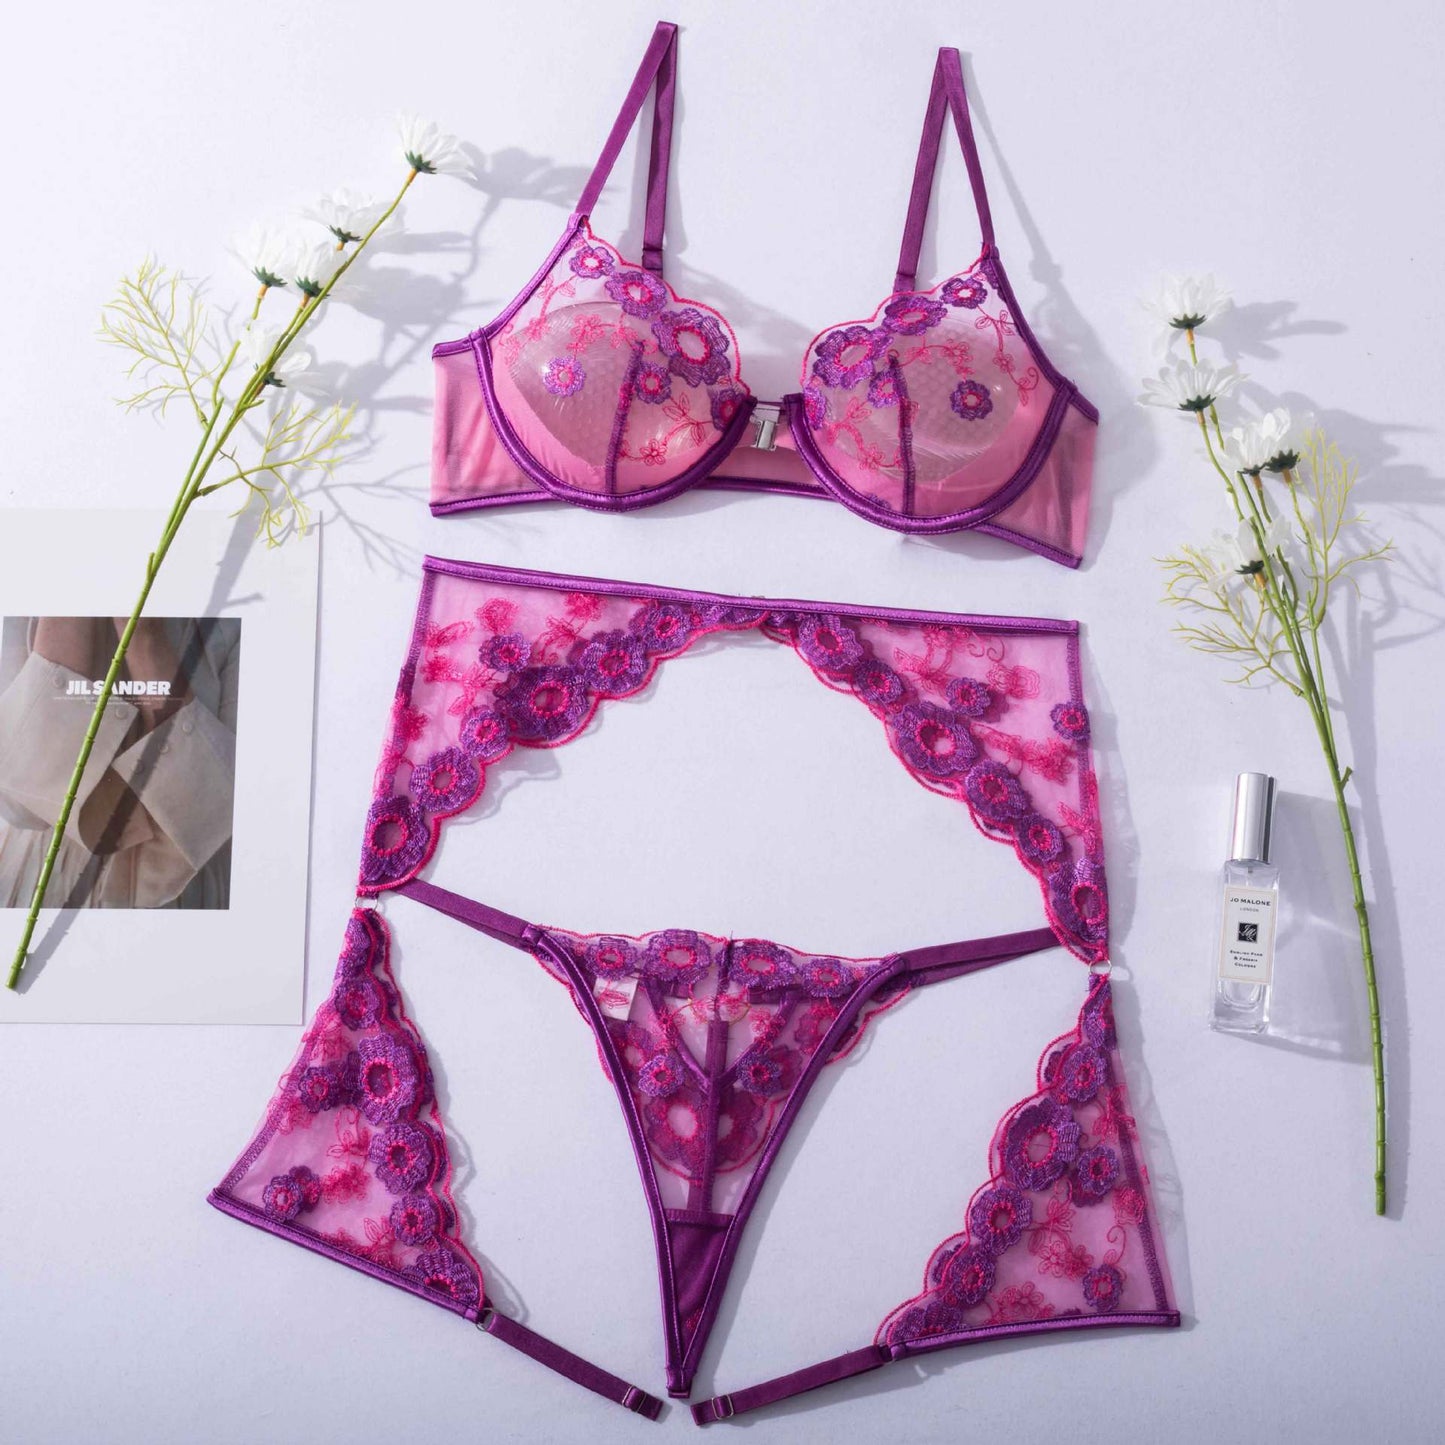 Violet Blossom Delight Lingerie Set: Floral Embroidery, Underwire Bra, and Unique Garter Belt